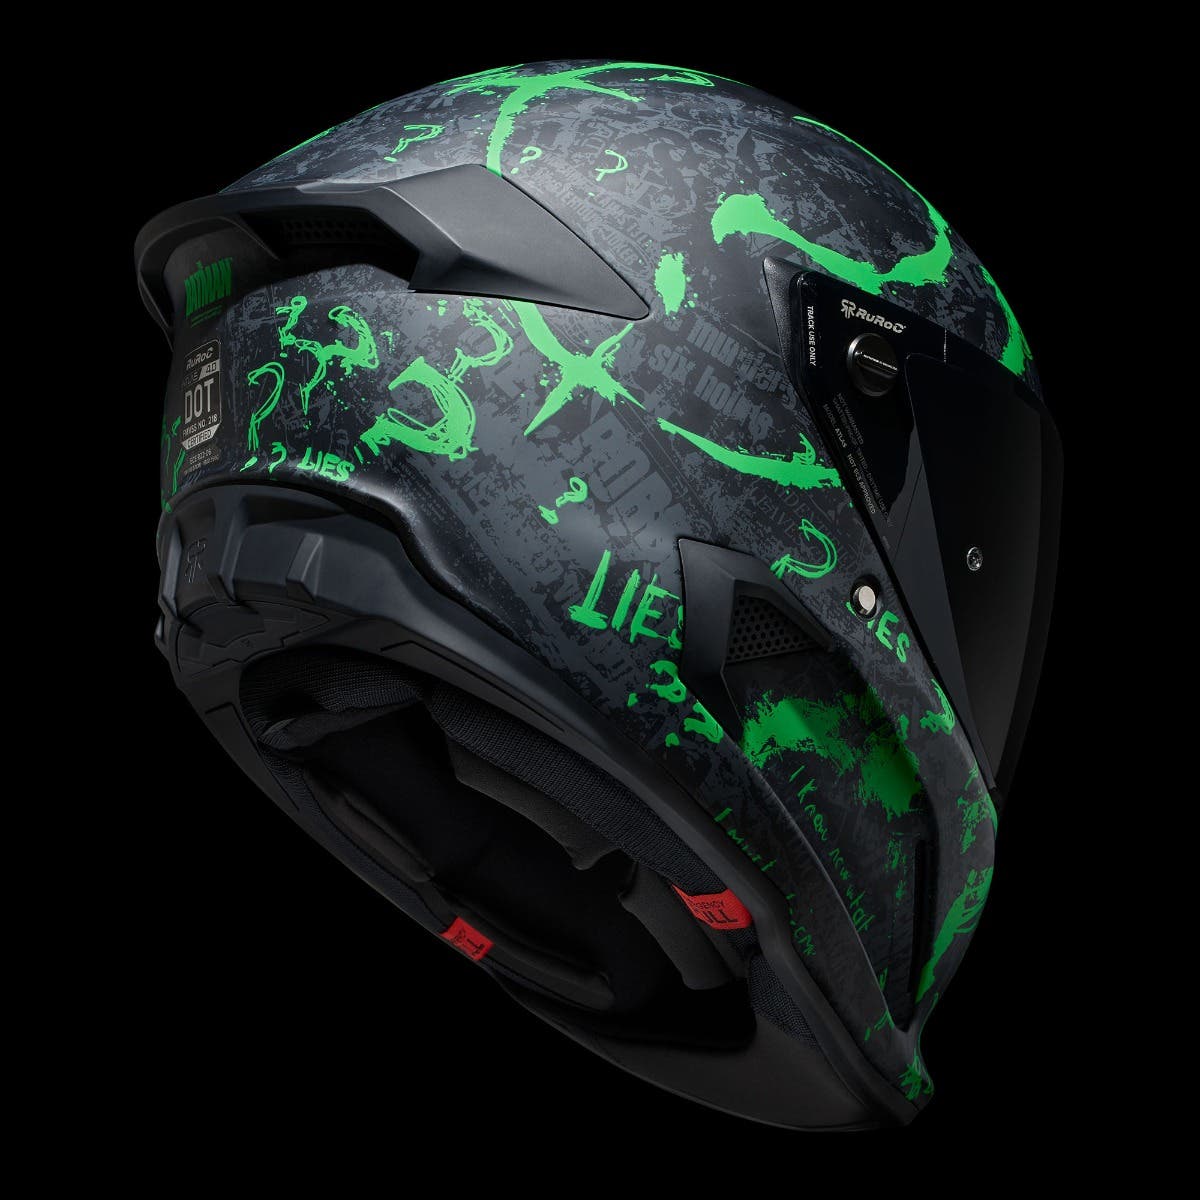 ATLAS 4.0 The Riddler - Motorcycle Helmet - Ruroc